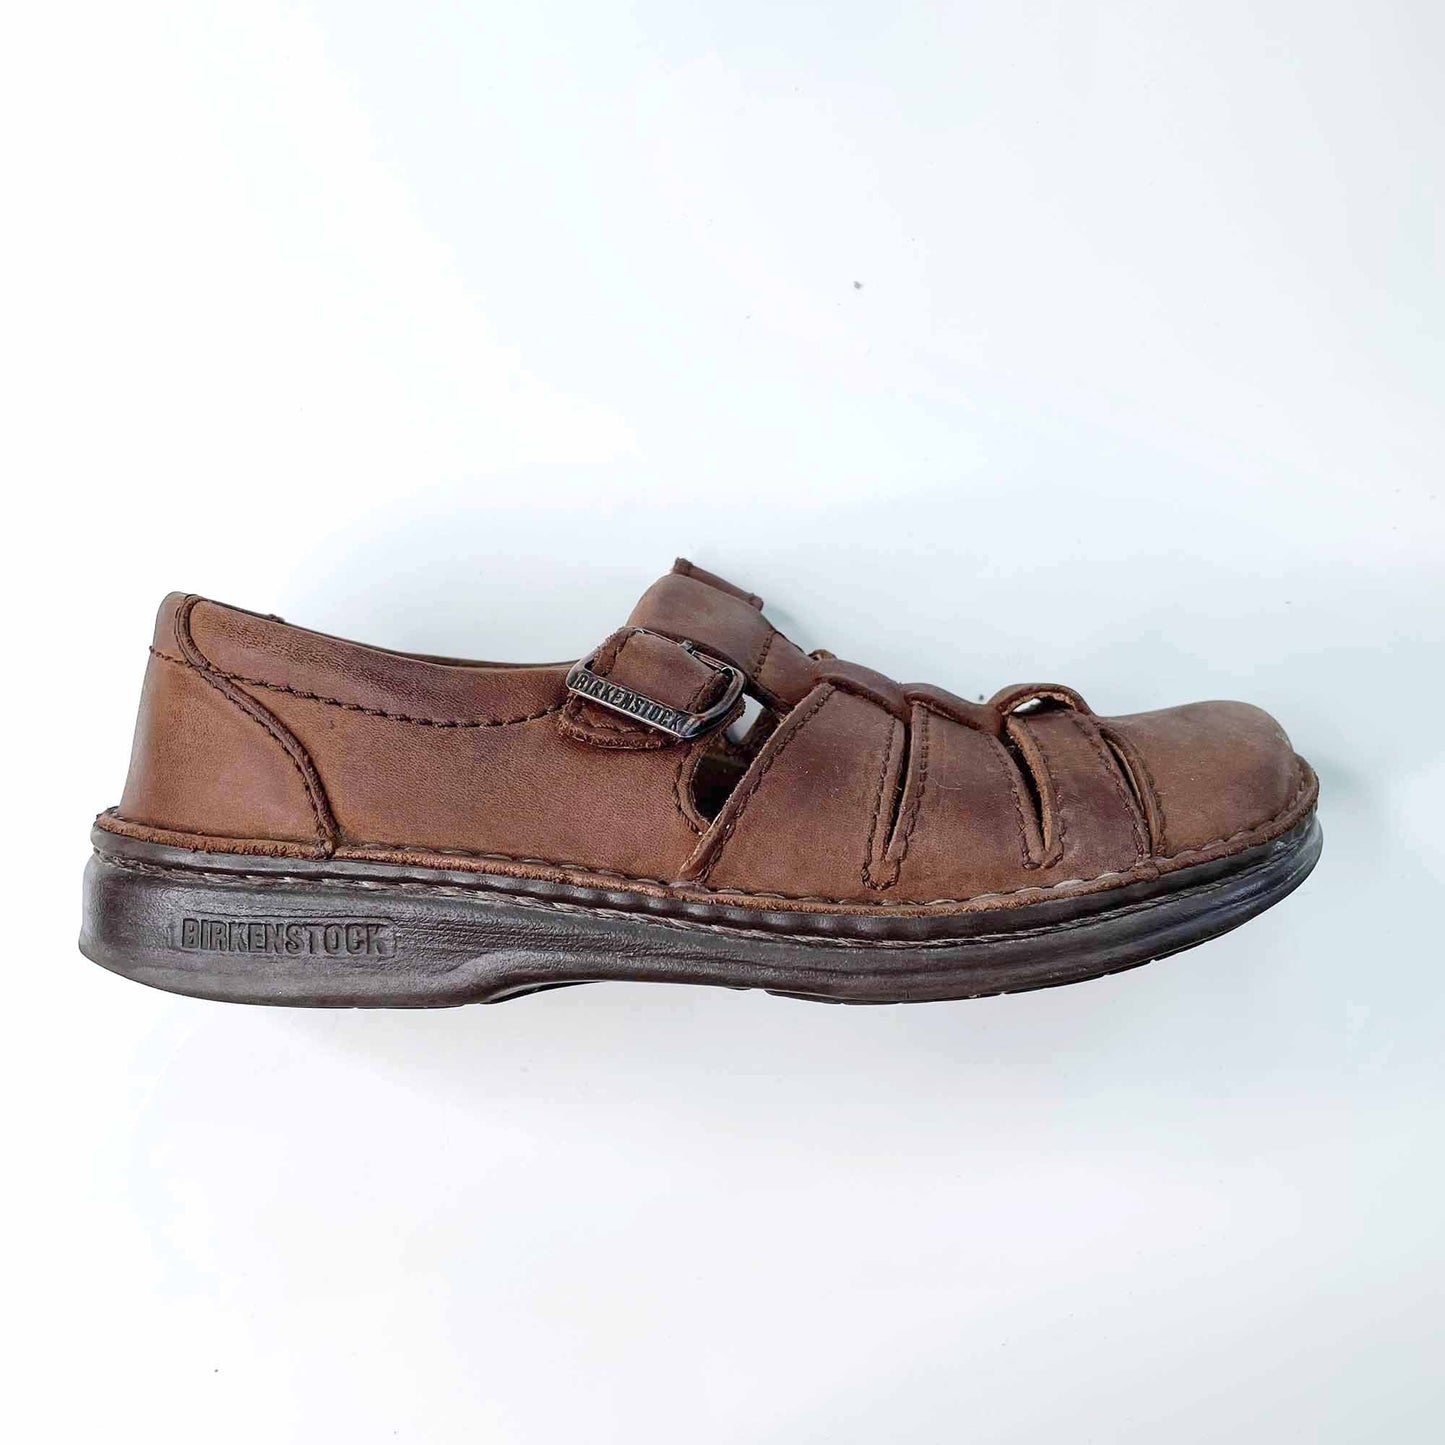 birkenstock leather fisherman sandals - size 37